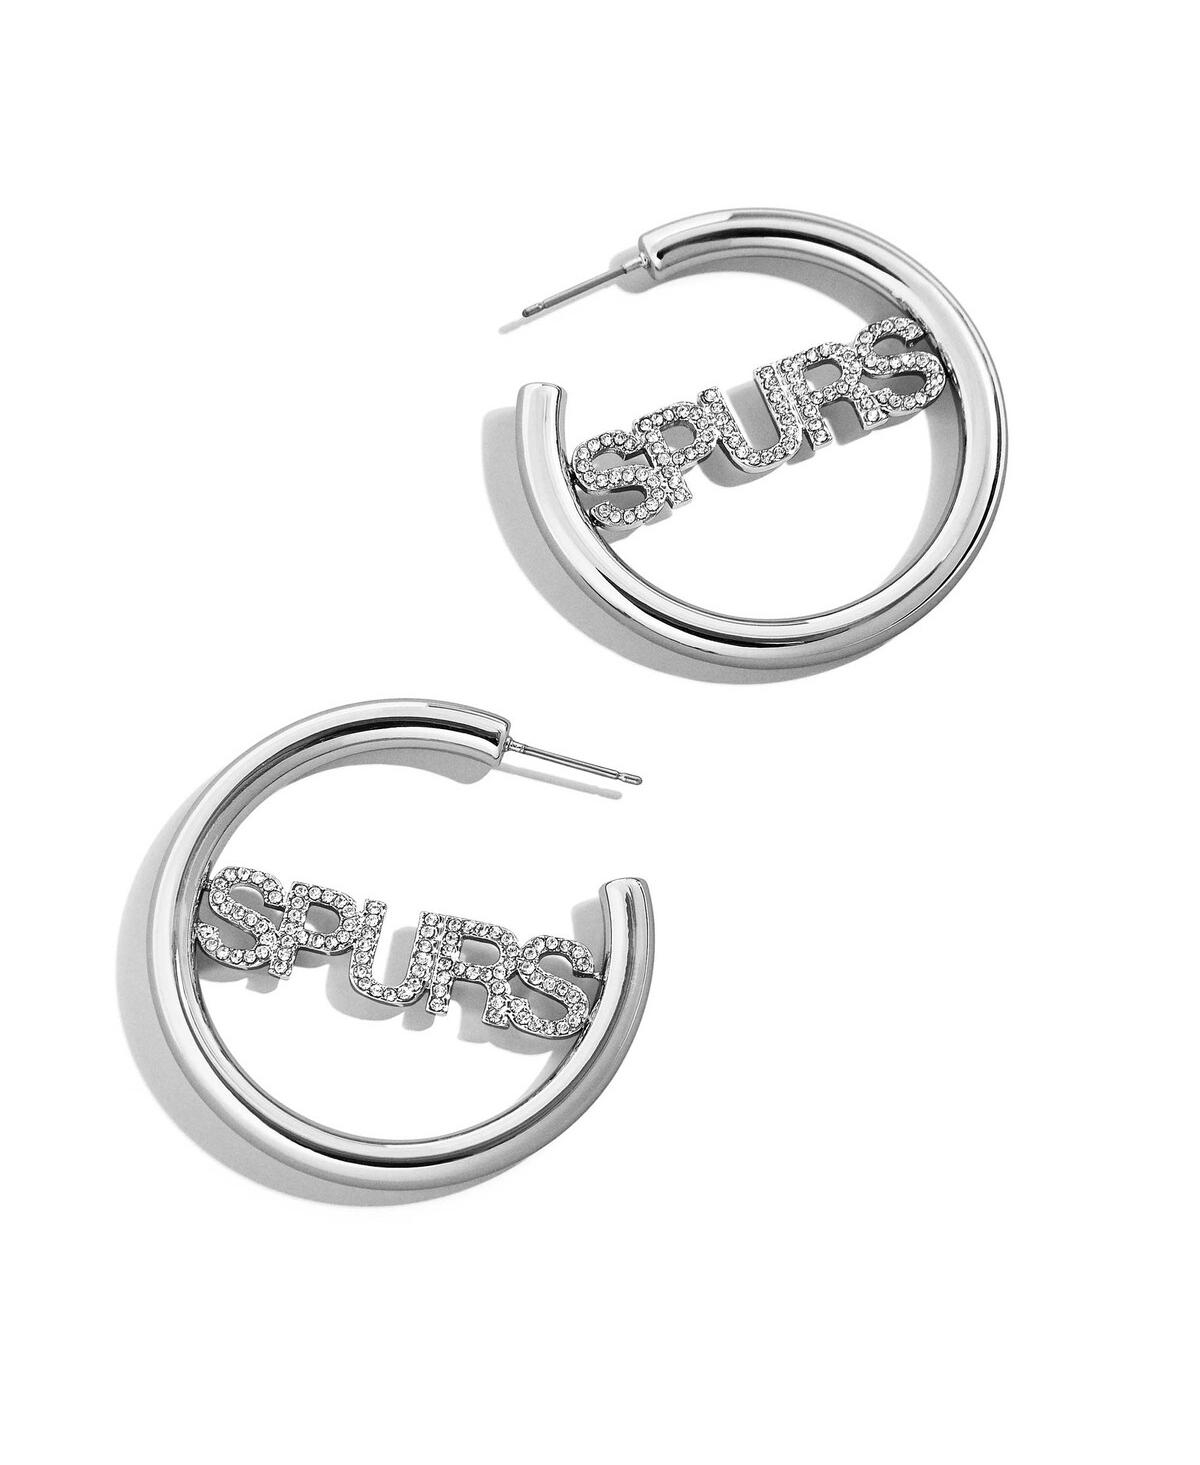 Women's Baublebar San Antonio Spurs Hoop Earrings - Silver-Tone